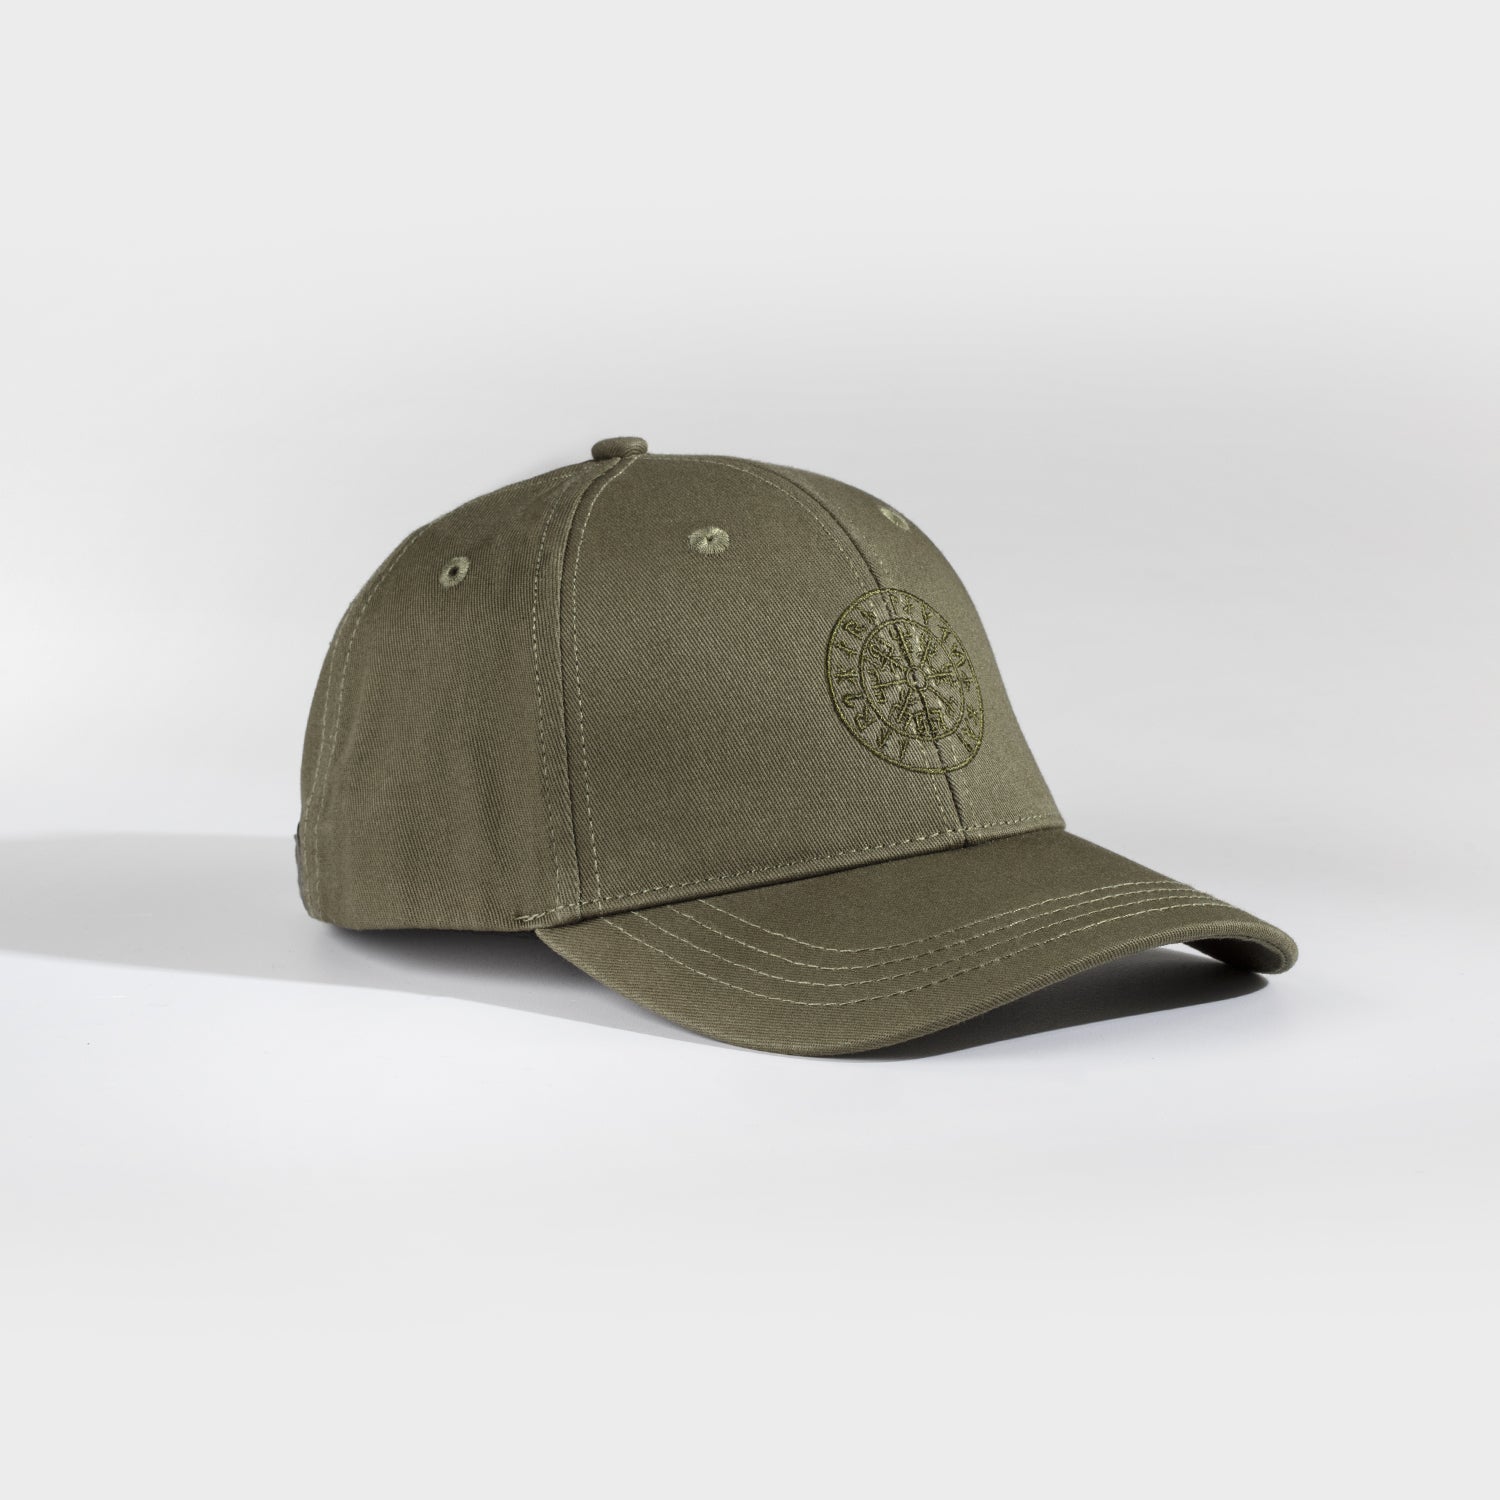 NL Vegvisir cap - Dusty green